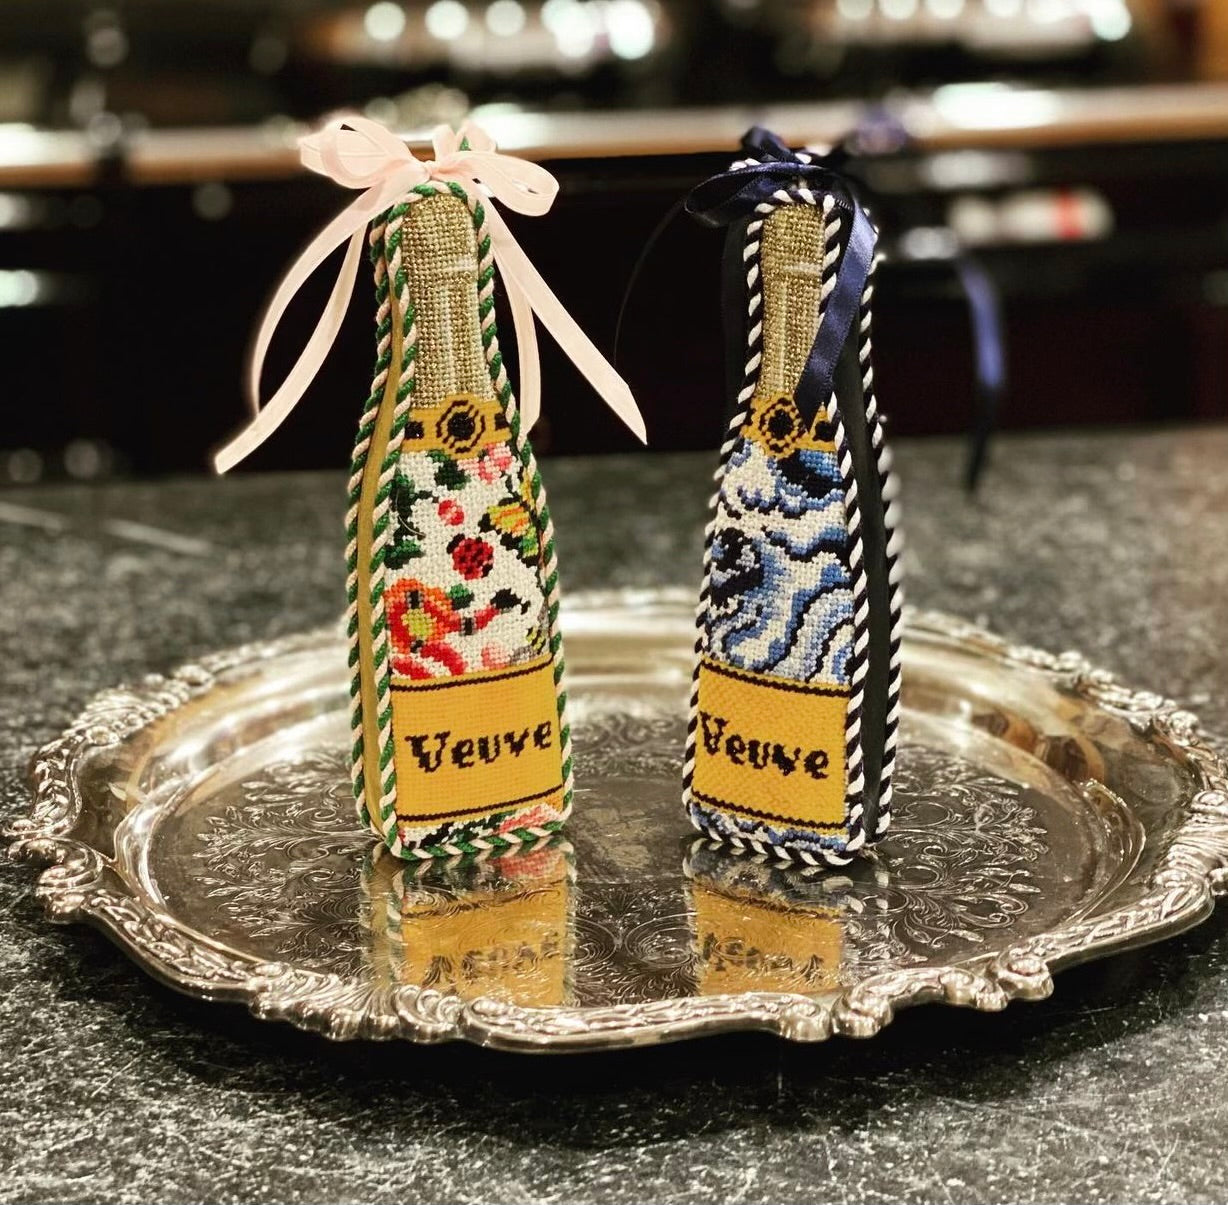 "Veuve" Single Champagne Bottle MASTERS OPEN GOLF 18 mesh handpainted Needlepoint Canvas by C'ate La Vie